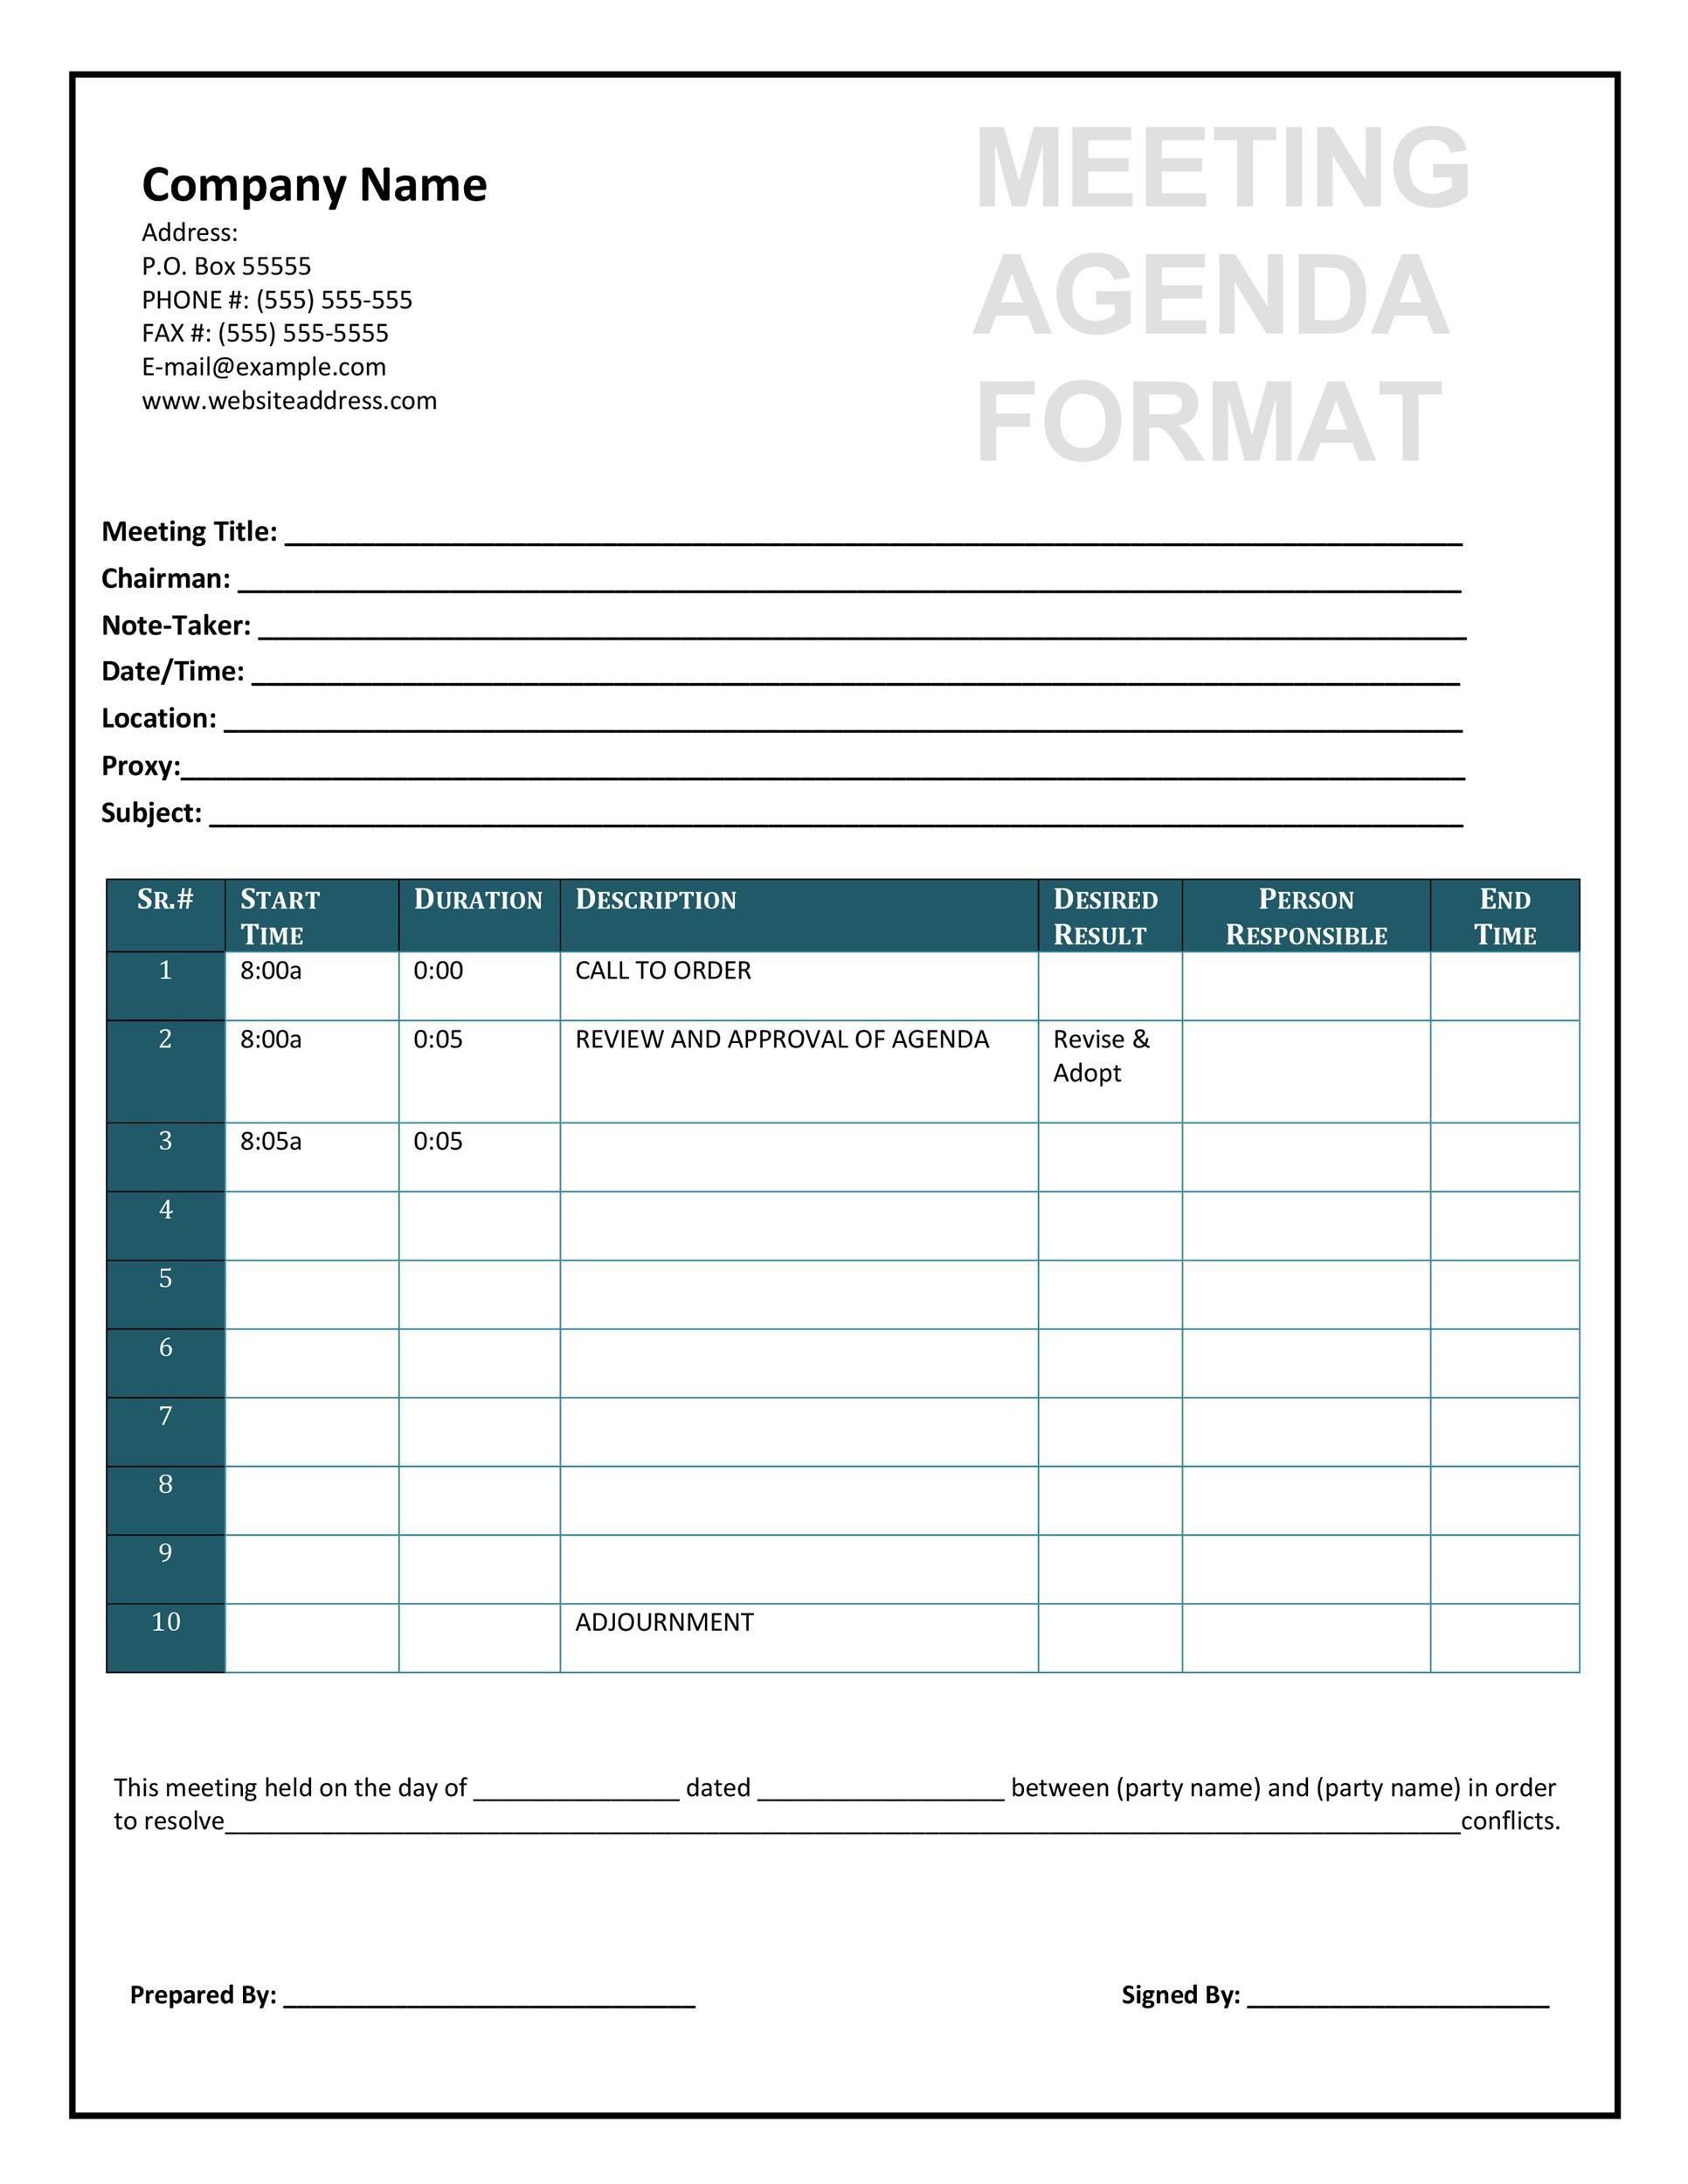 46 Effective Meeting Agenda Templates ᐅ TemplateLab